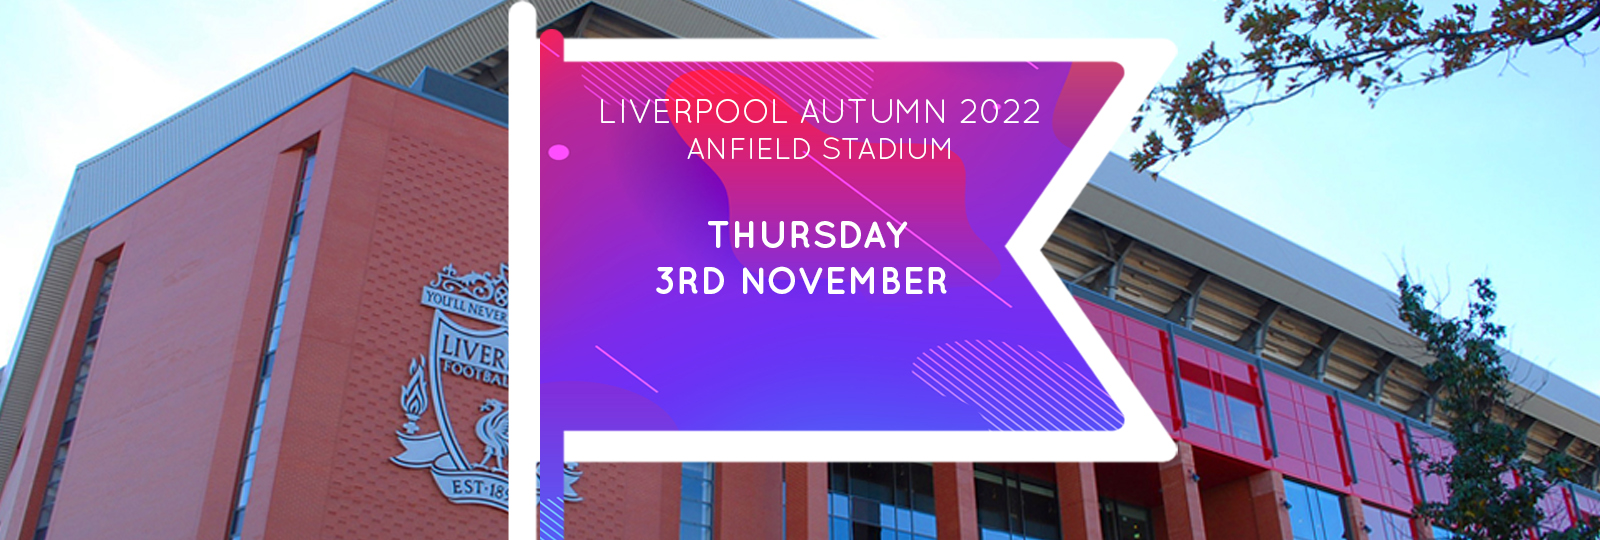 Liverpool Autumn 2022 Fair